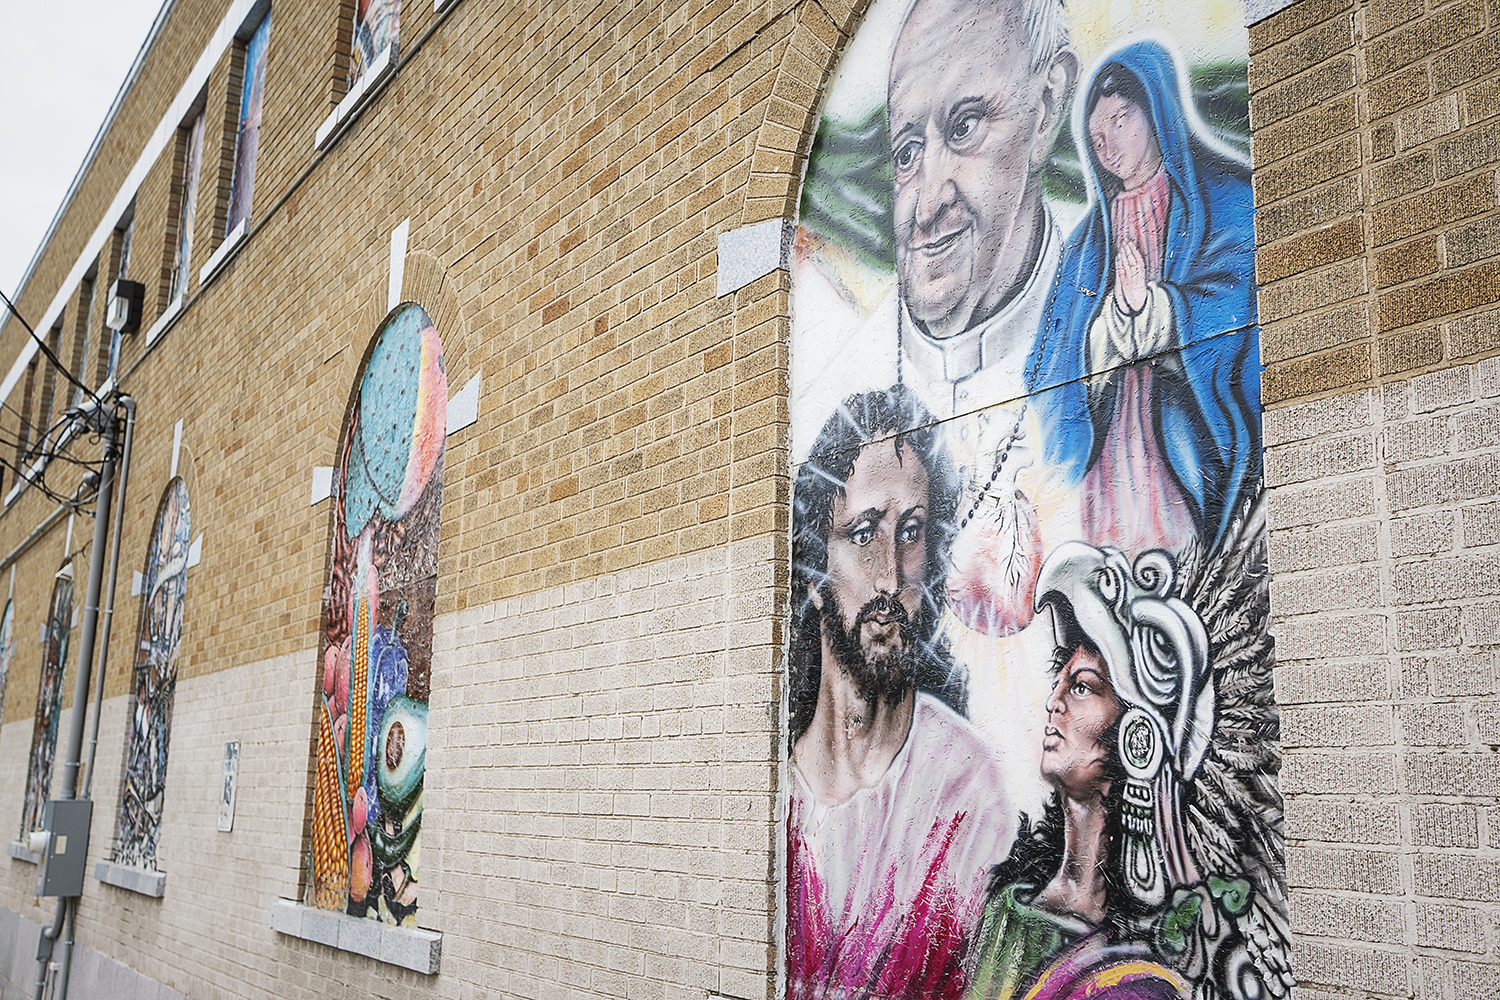 Flint, MI - Tuesday, June 19, 2018: Murals adorn the walls at the Hispanic Technology and Community Center of Flint.